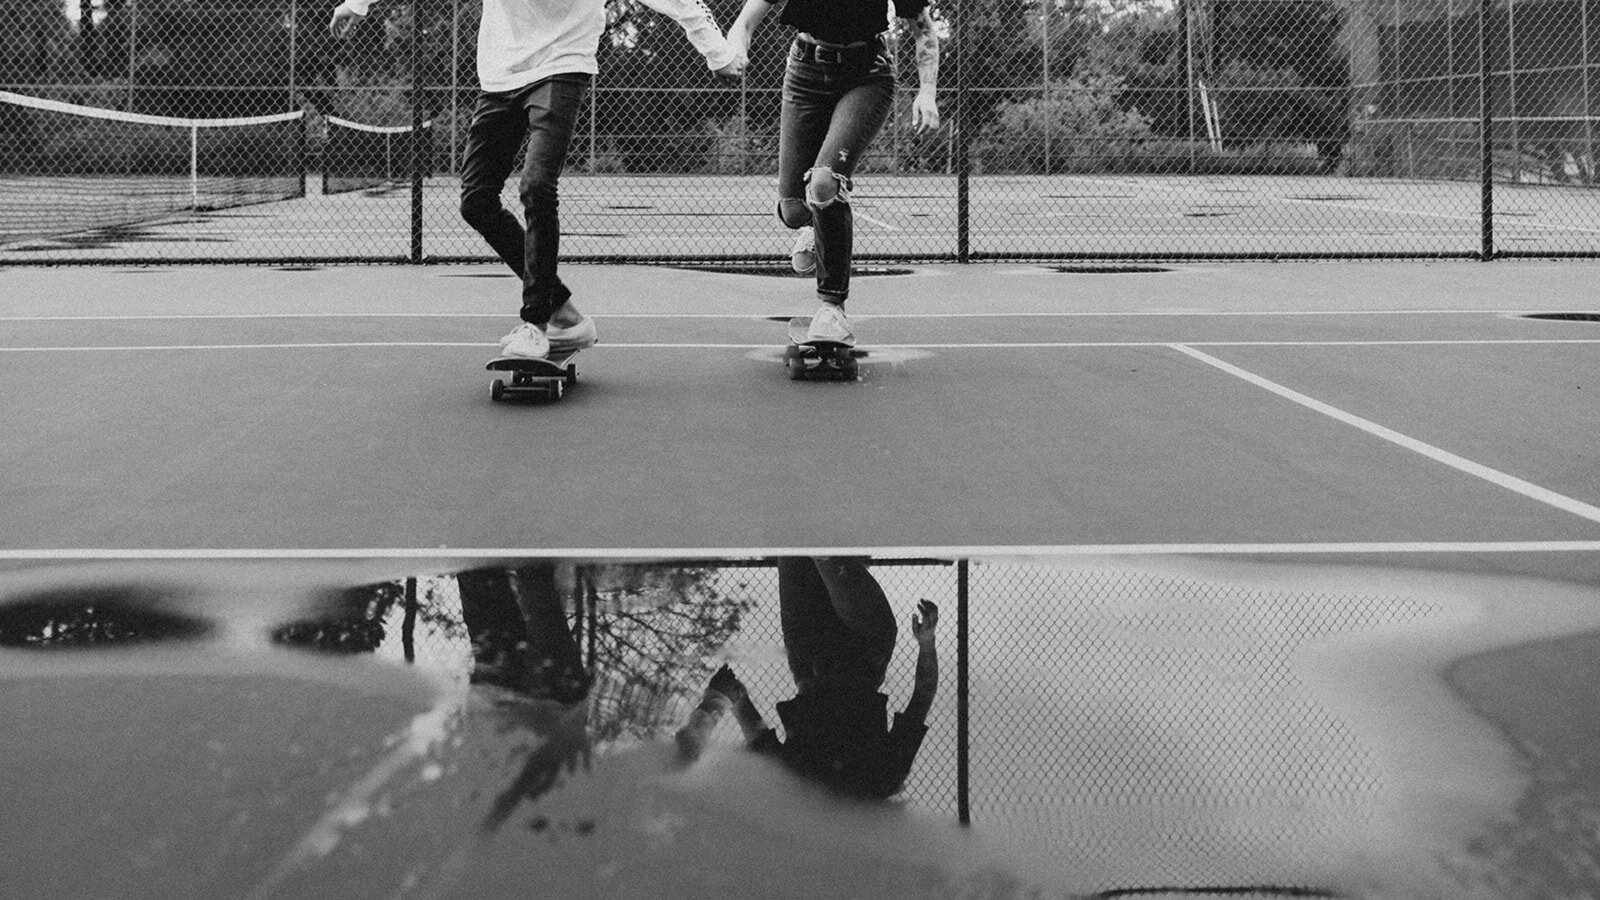 Skateboarding Couples Photos in Flagstaff, Arizona 